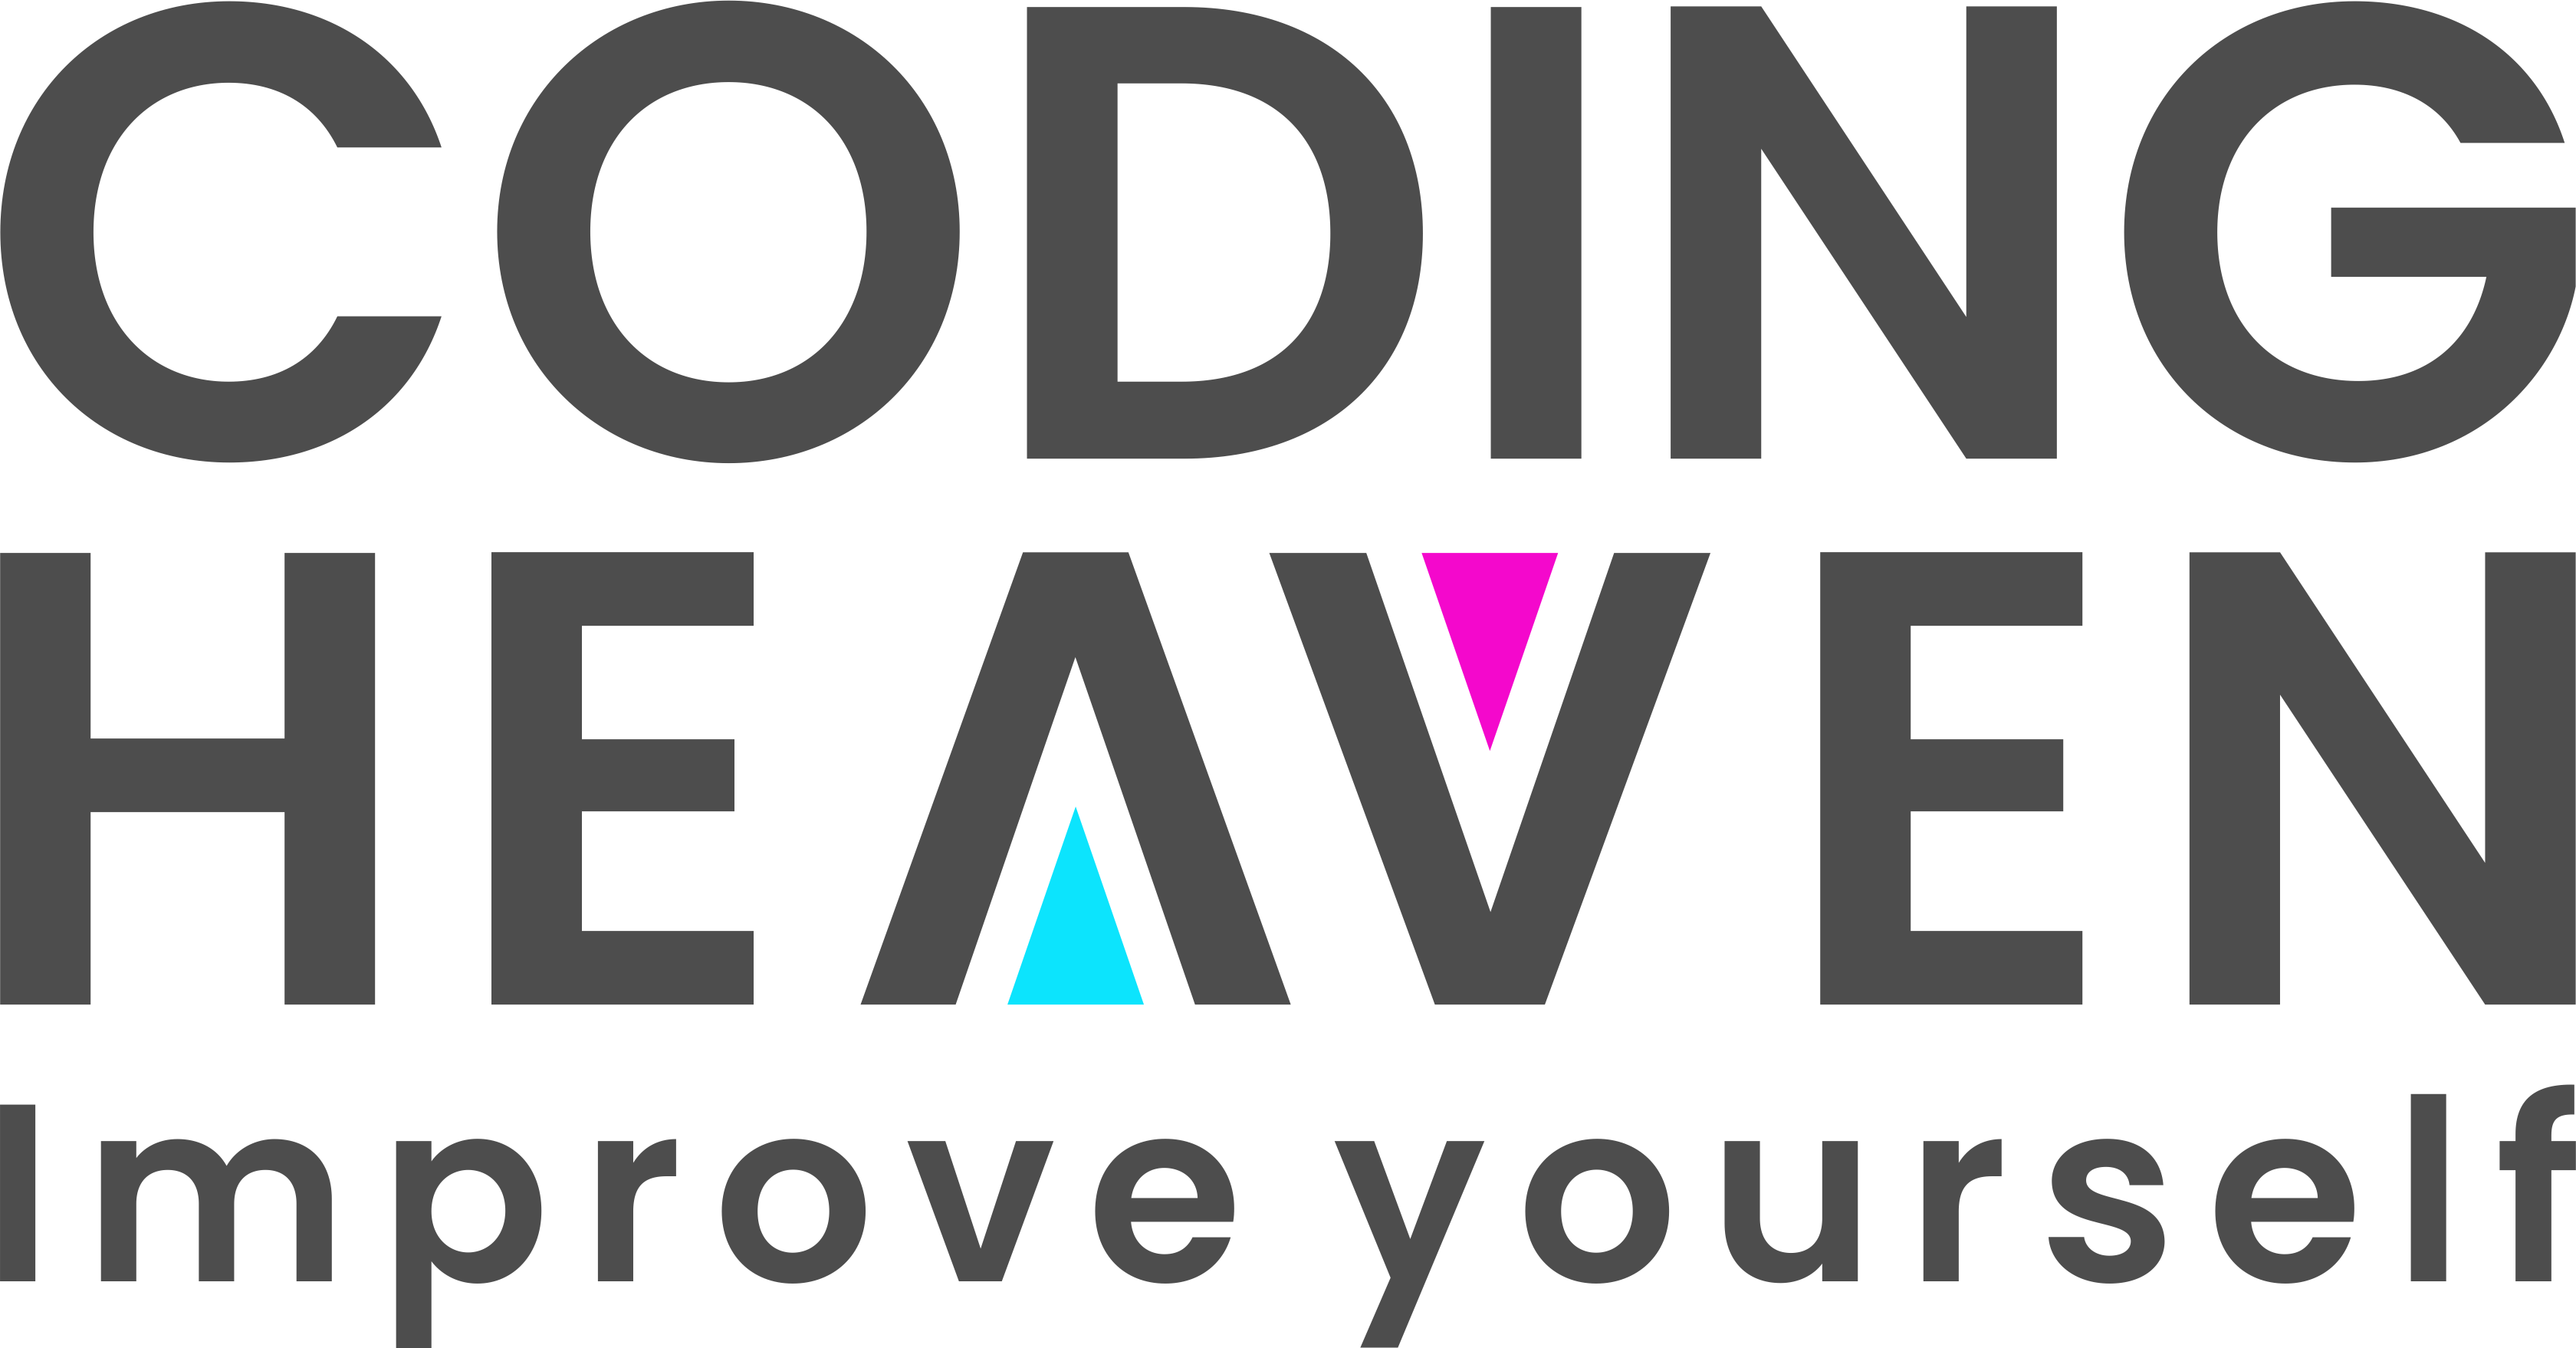 Coding Heaven logo